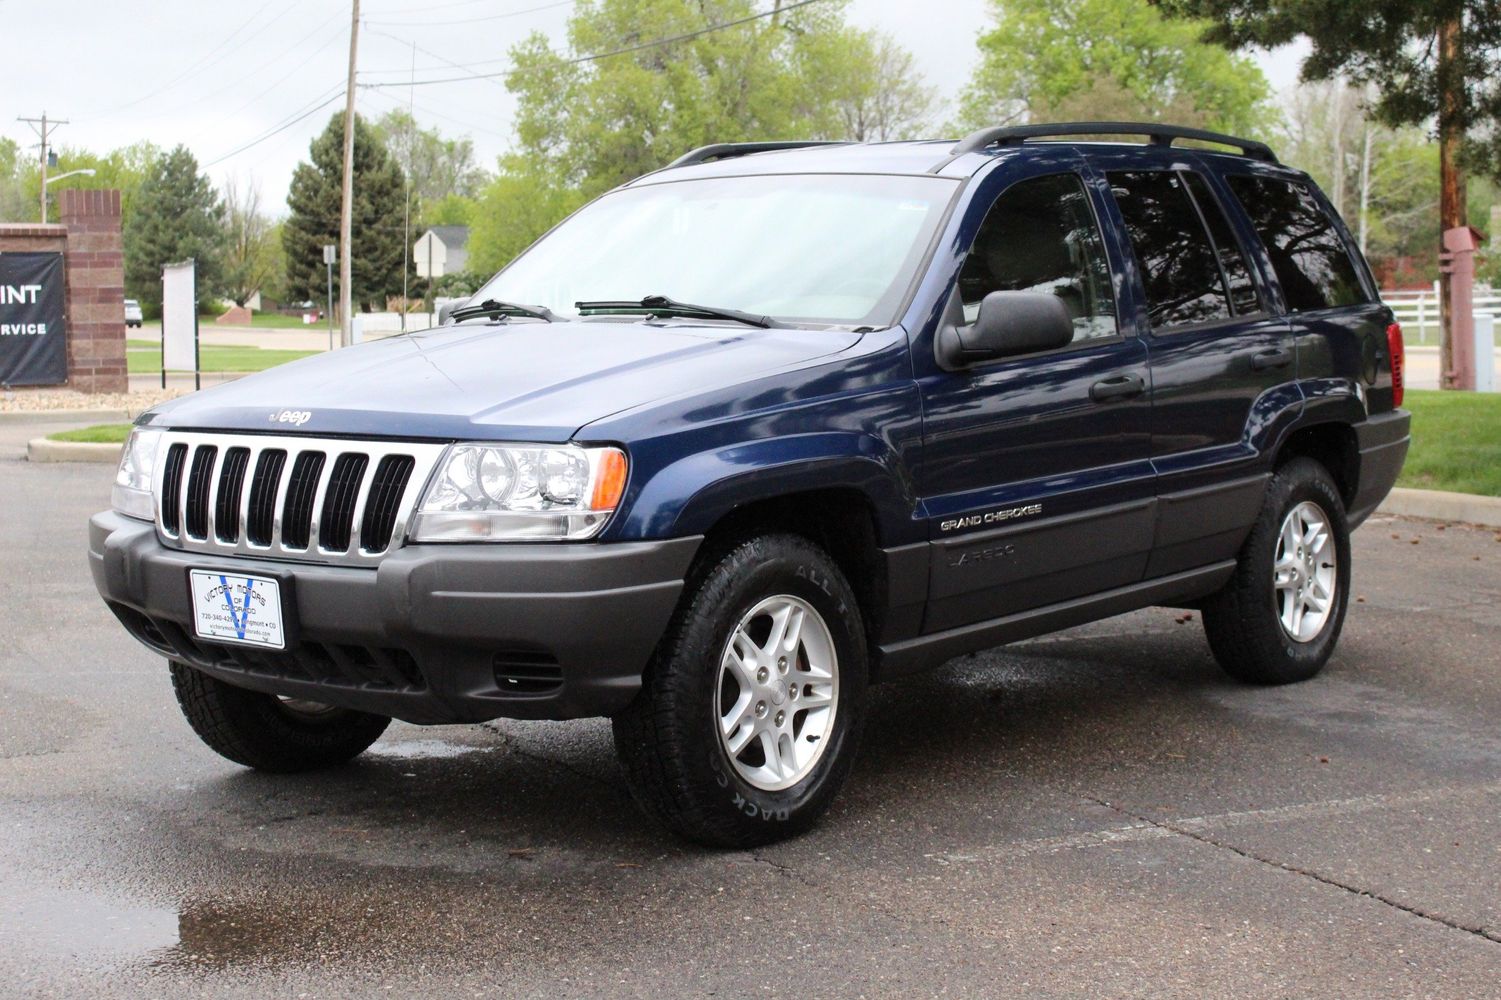 2002 Jeep Grand Cherokee Laredo | Victory Motors of Colorado 2002 Jeep Grand Cherokee Limited V8 Towing Capacity